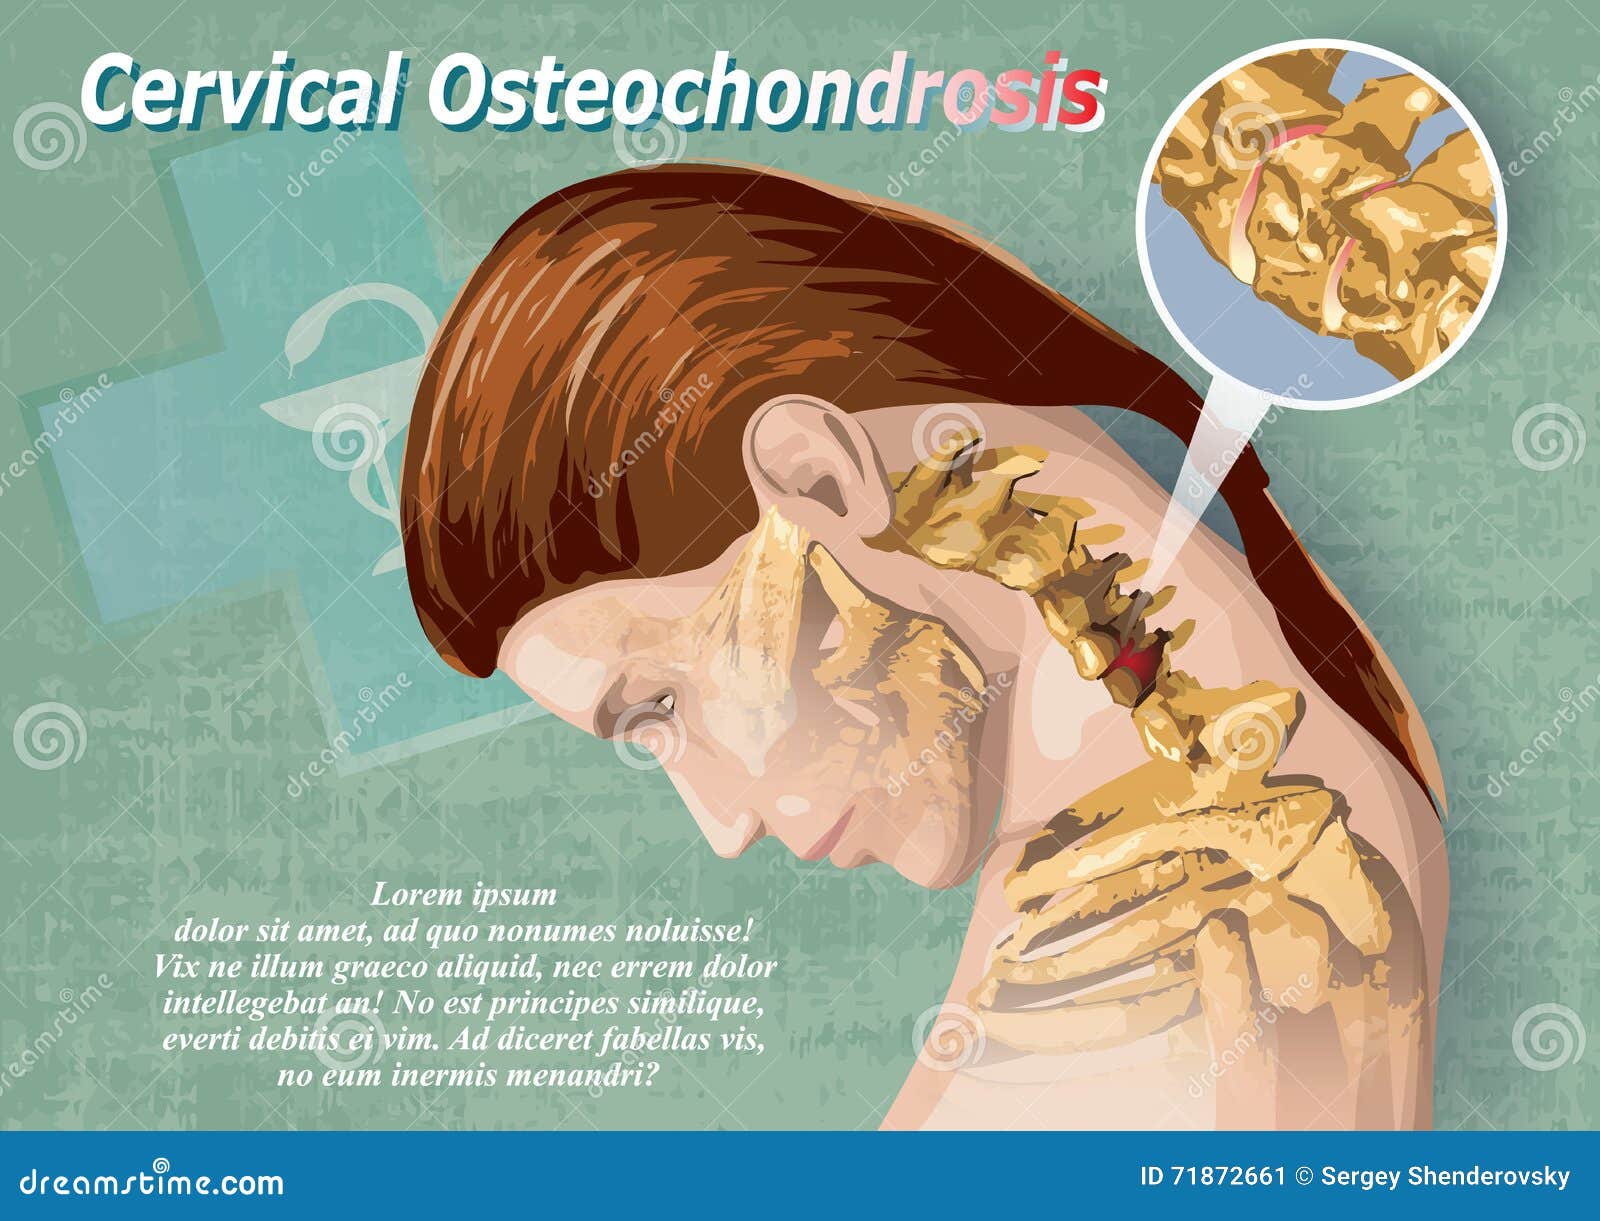 Osteochondrosis neck pain